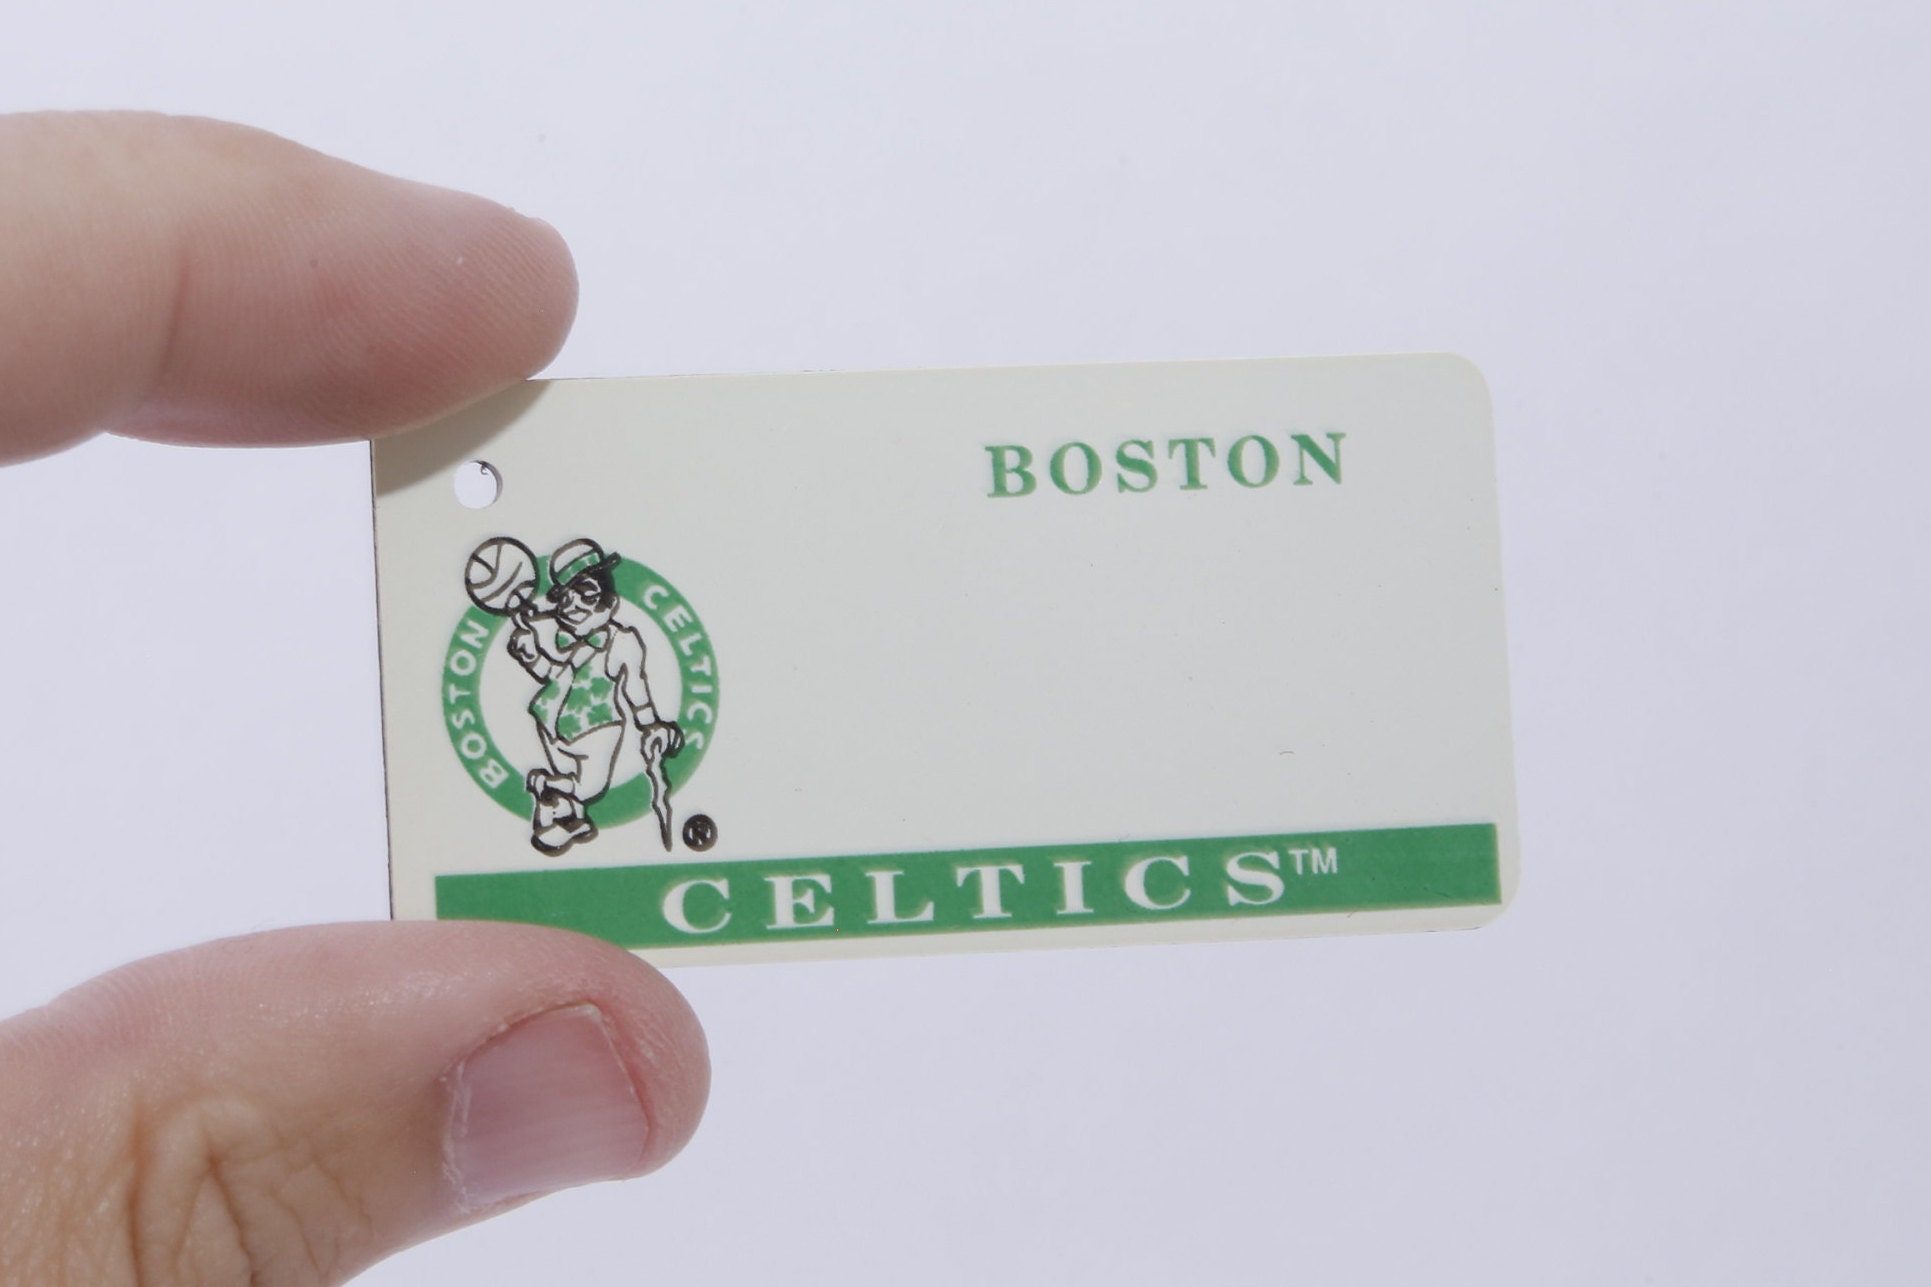 Boston Celtics Luggage, Handbags, Celtics Tote Bags, Carry-ons